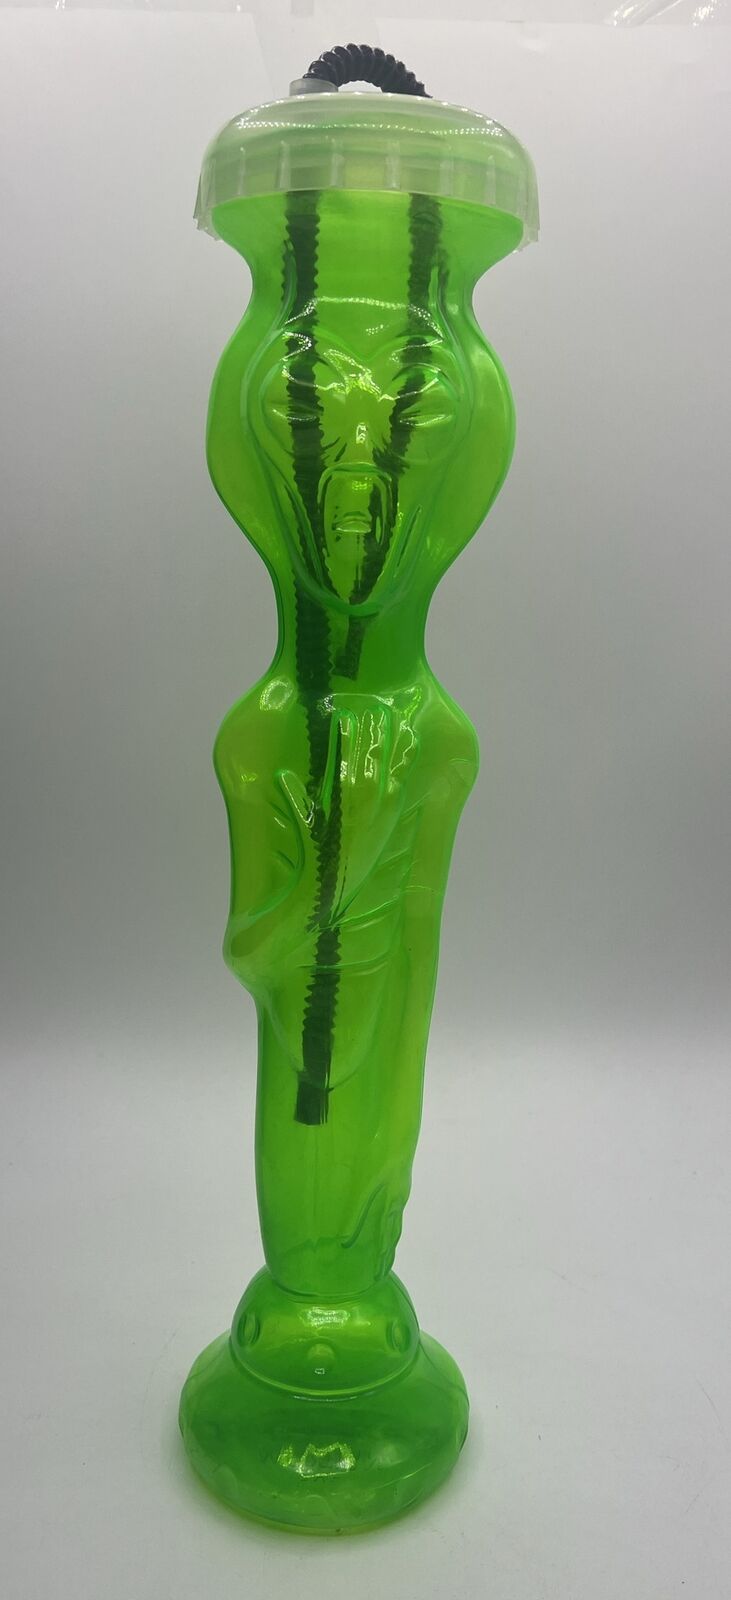 The Martian Neon Green Alien Drink Bottle With Straw BETRAS 16” Halloween Vtg